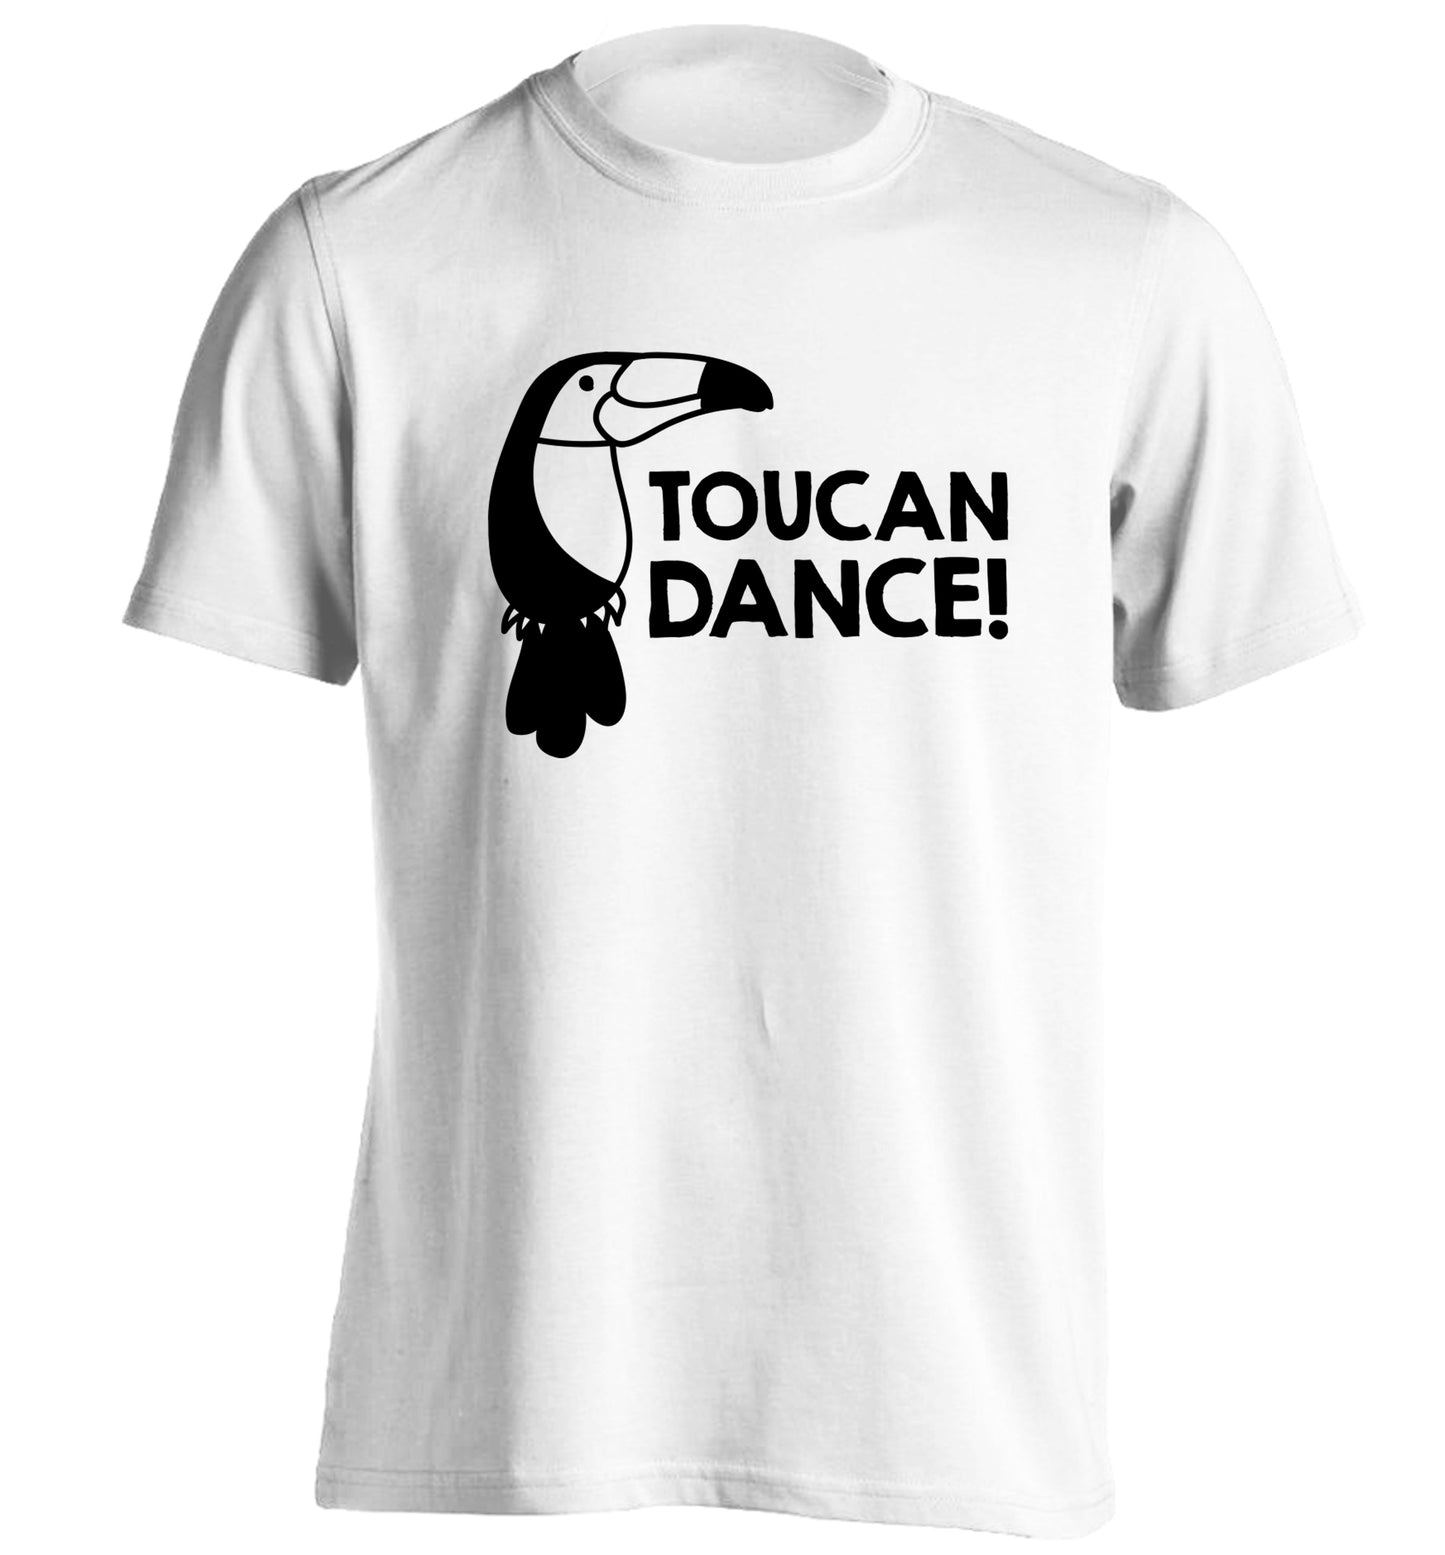 Toucan dance adults unisex white Tshirt 2XL